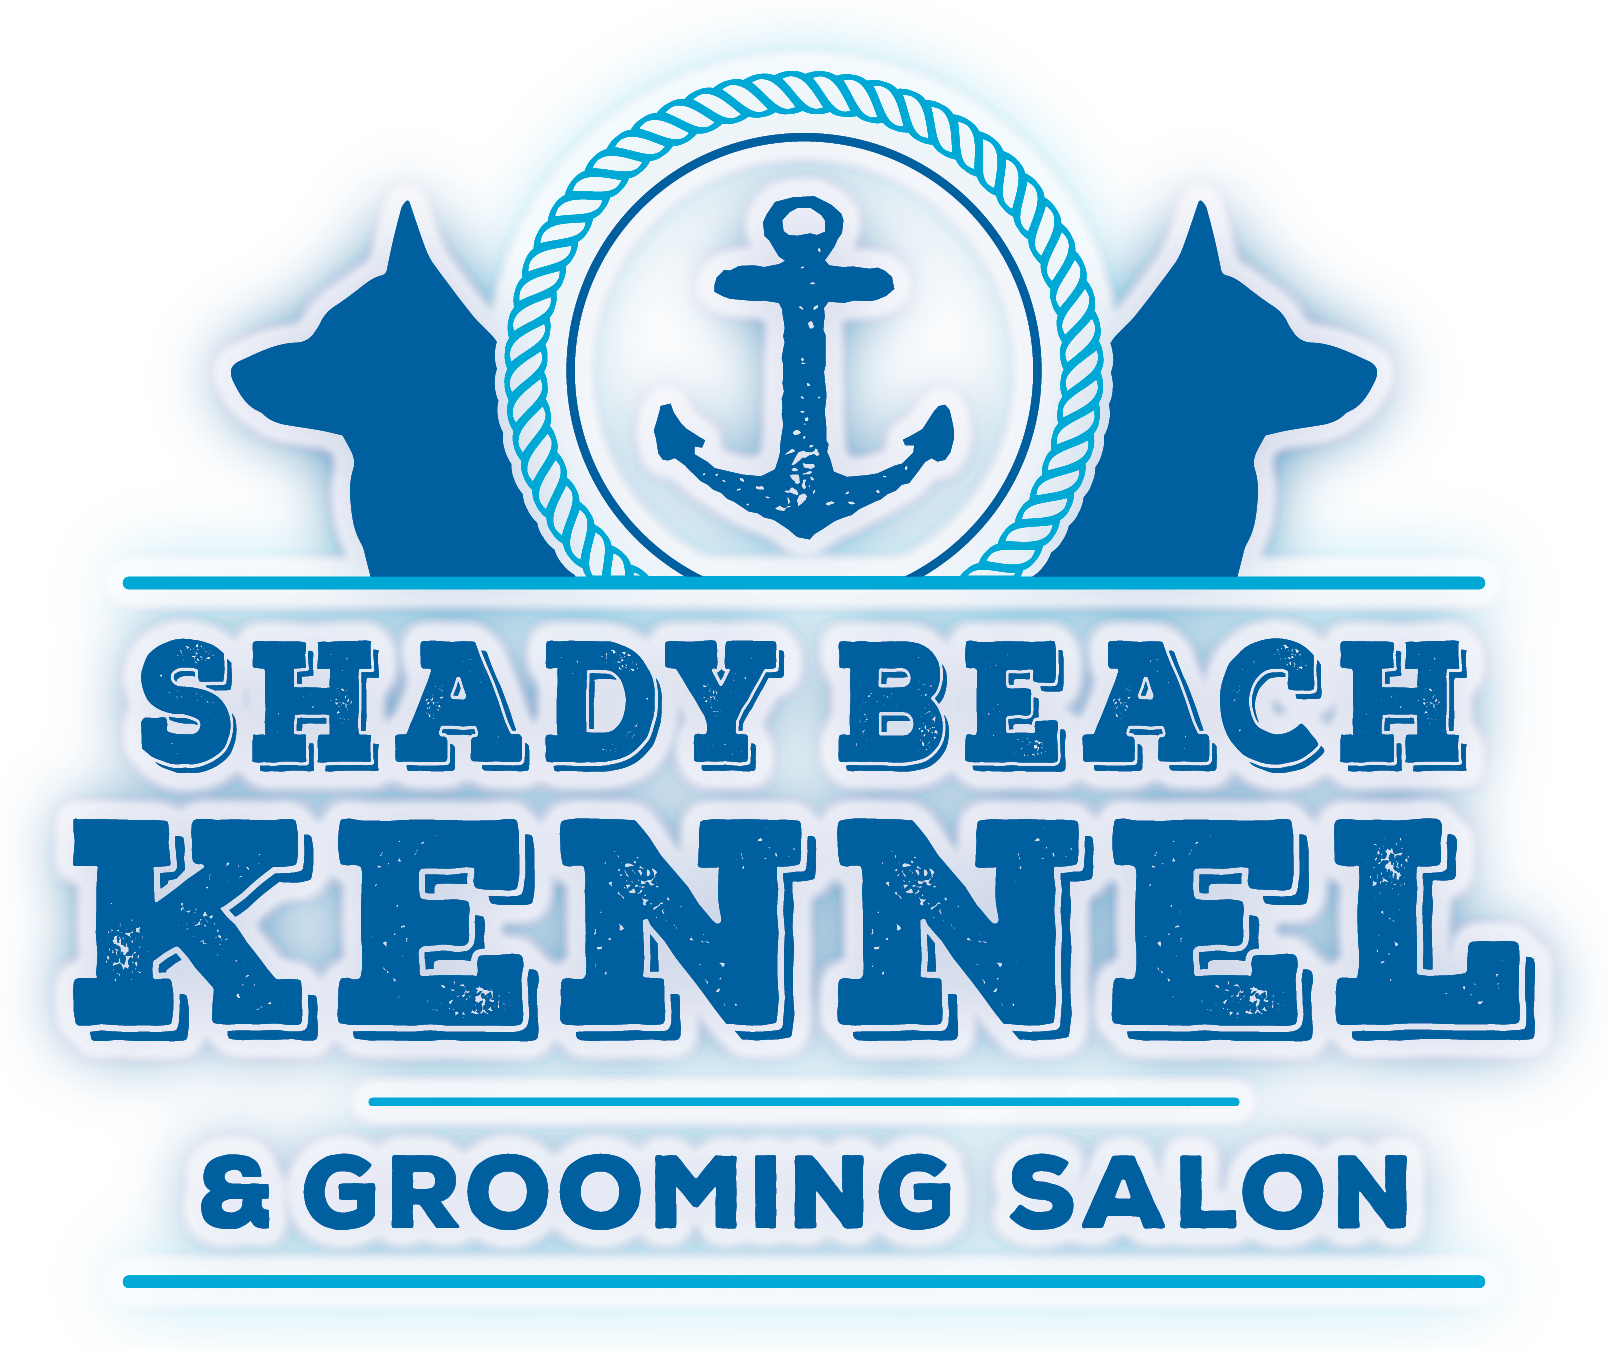 Shady Beach Kennel & Grooming Salon